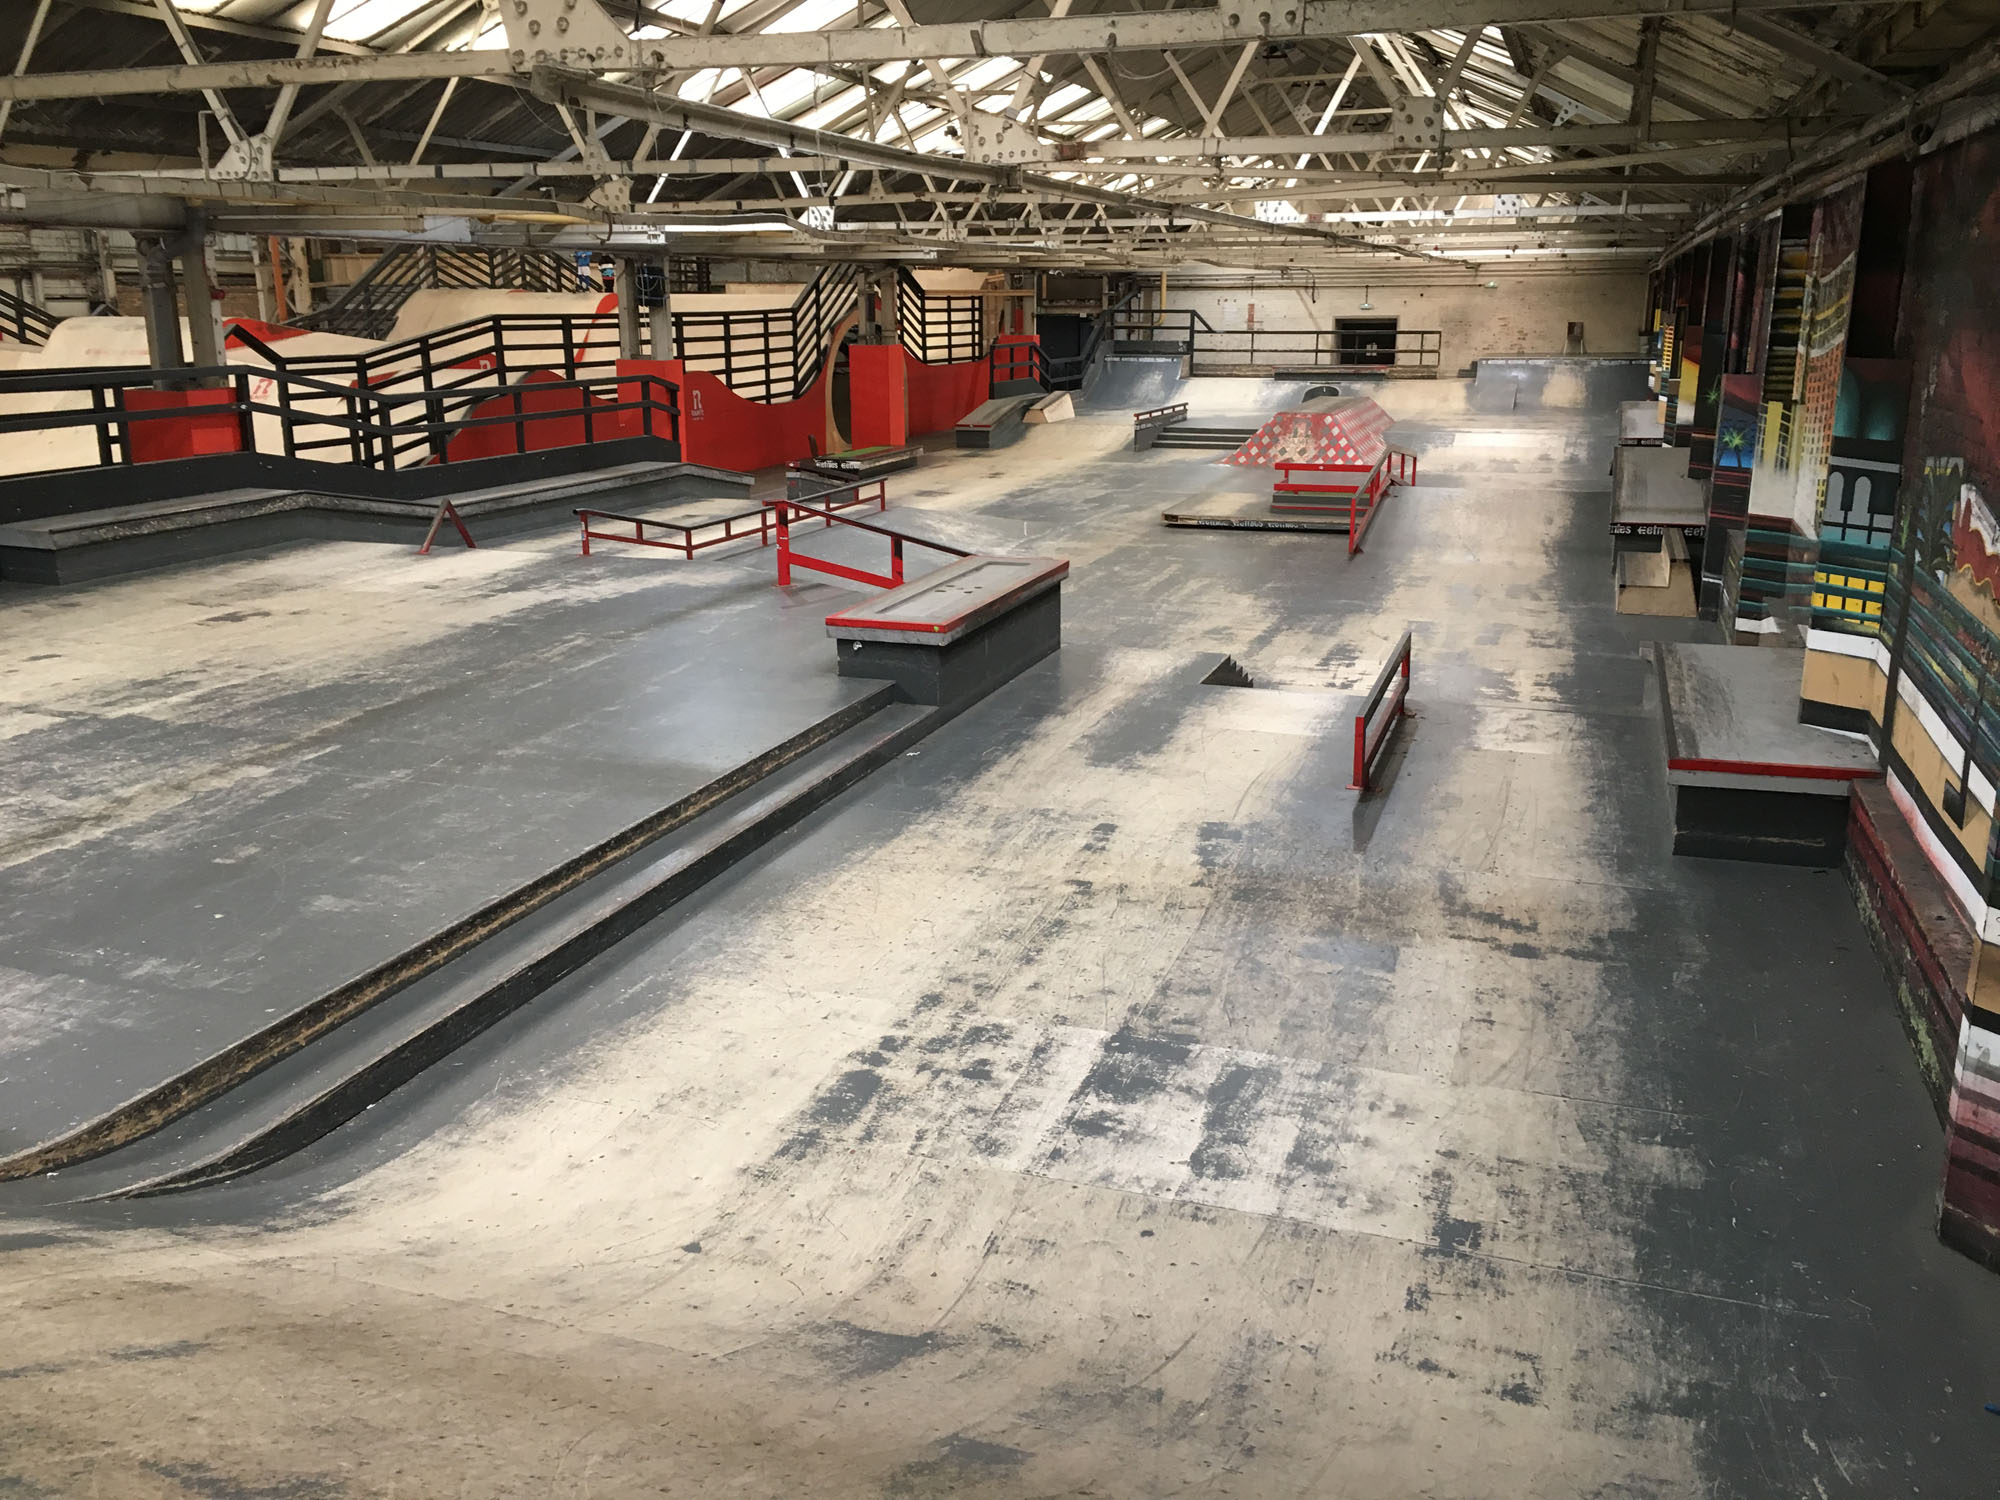 ramp 1 skatepark warrington review tips skateboarding in cheshire u k